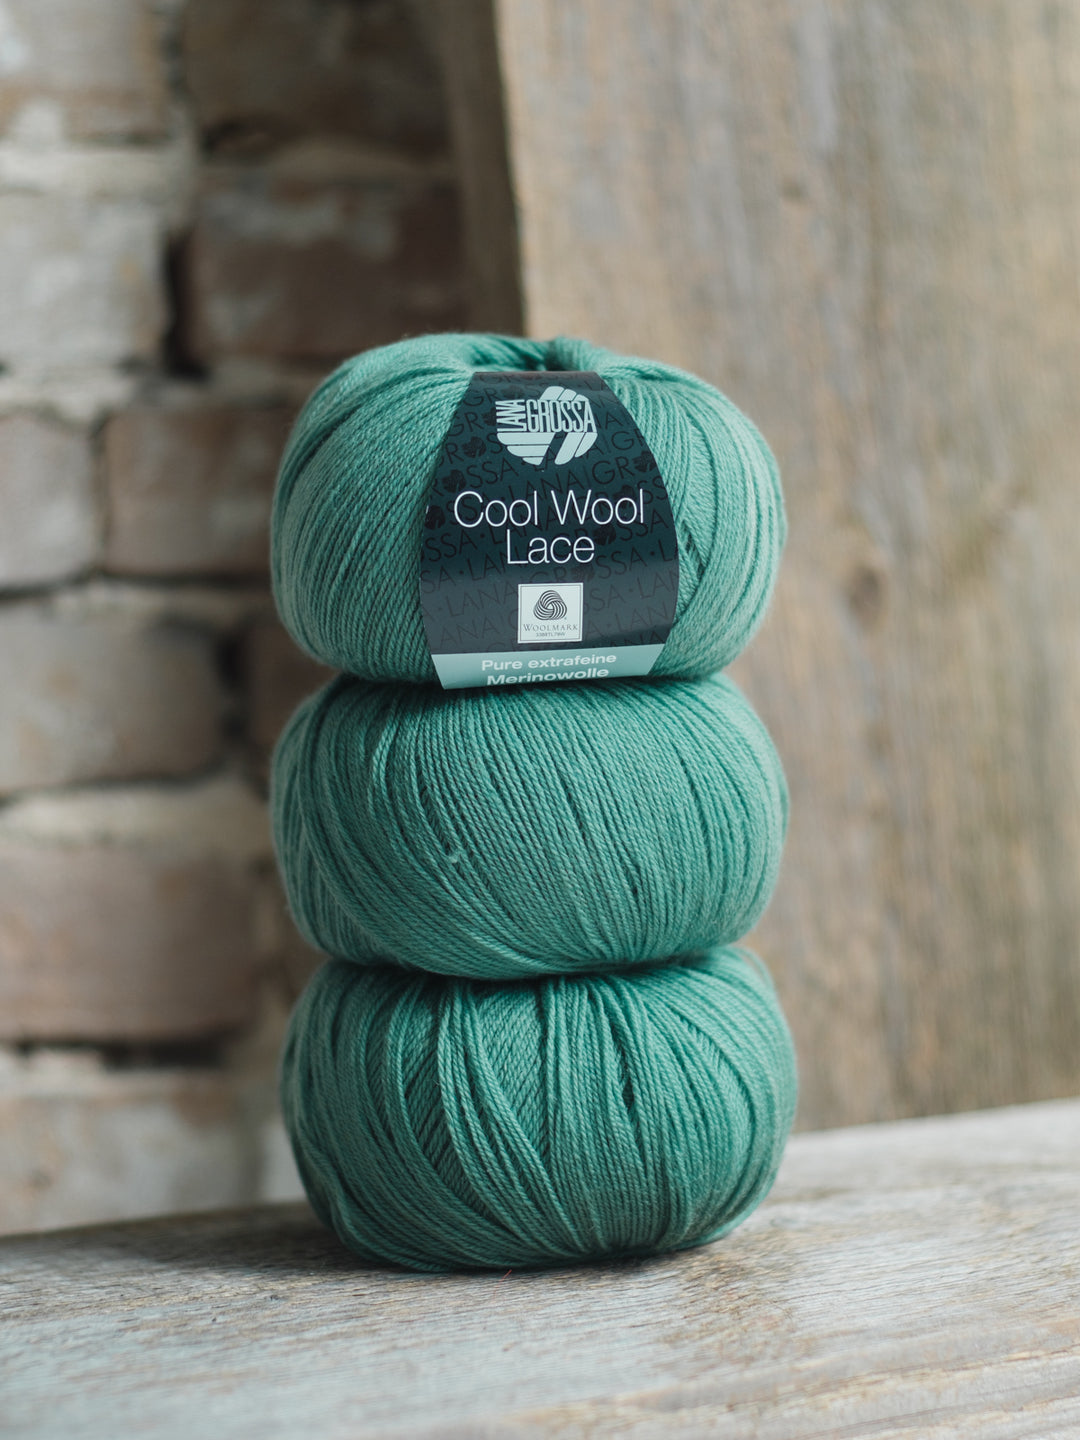 Cool Wool Lace 039 Mignonette groen